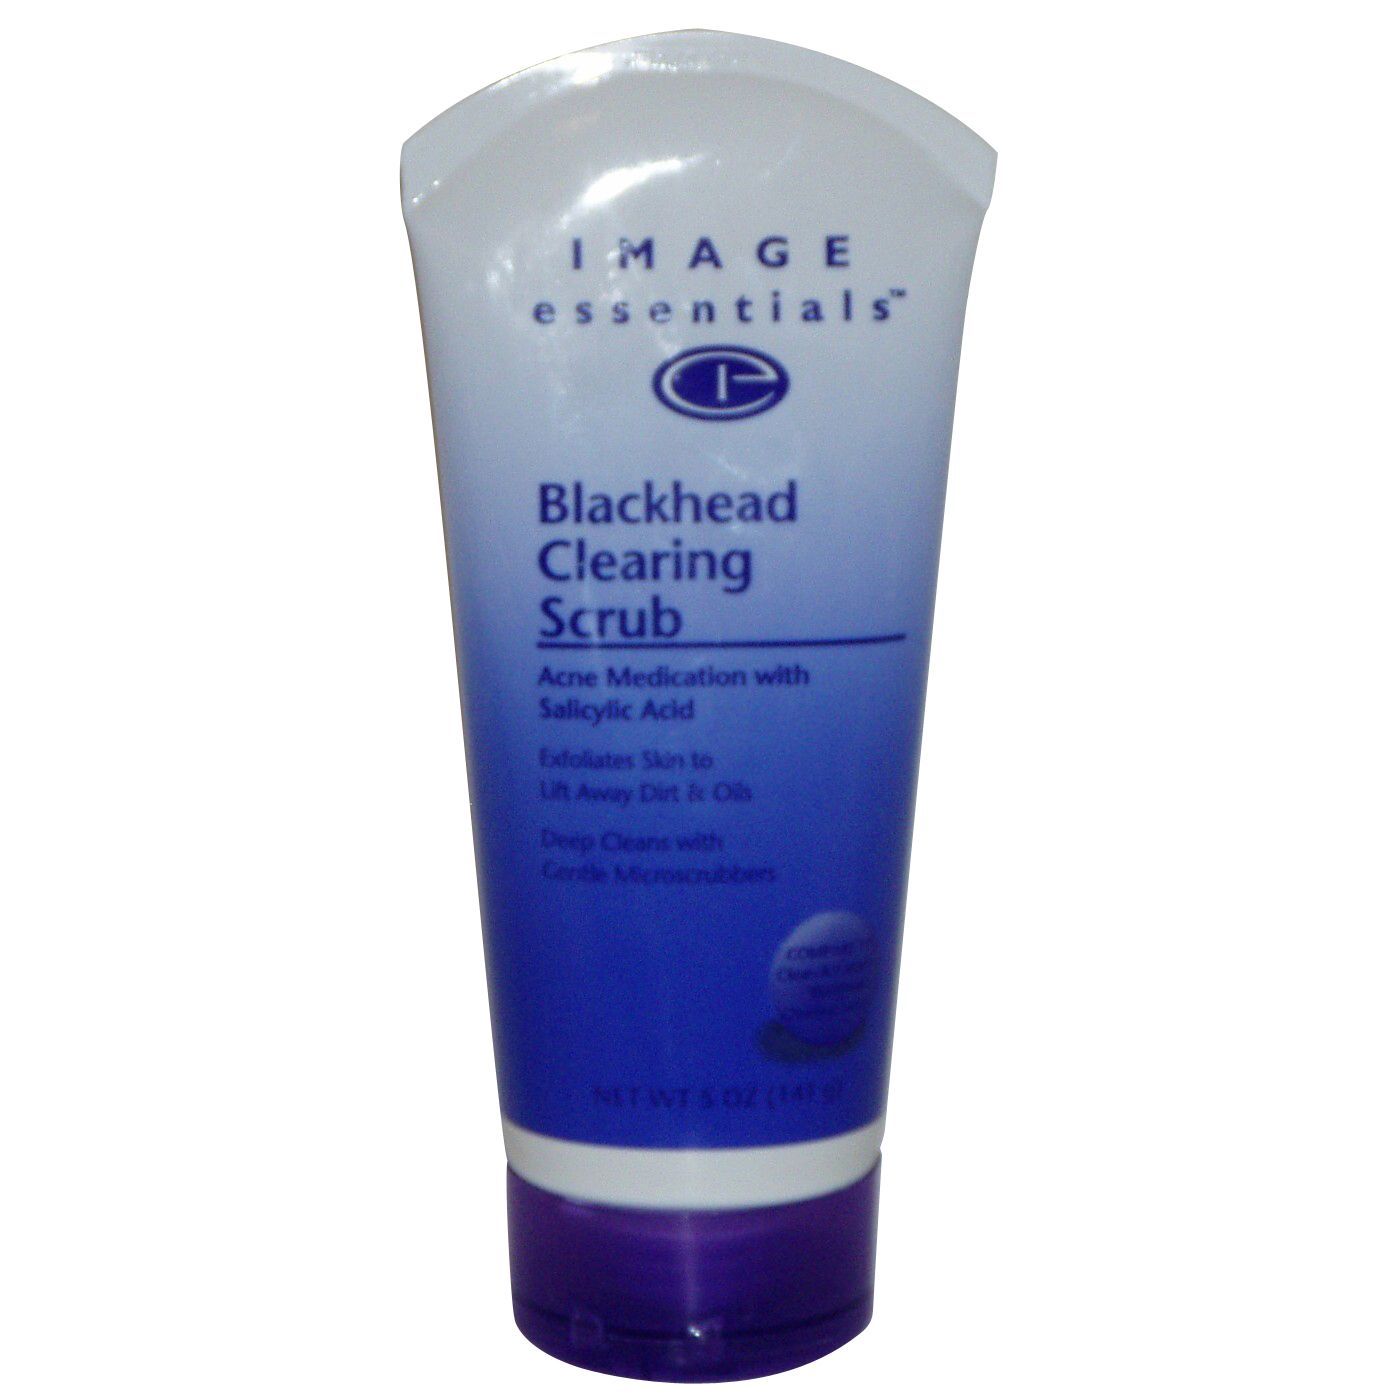 Image Essentials Blackhead Clearing Scrub 5 ounce